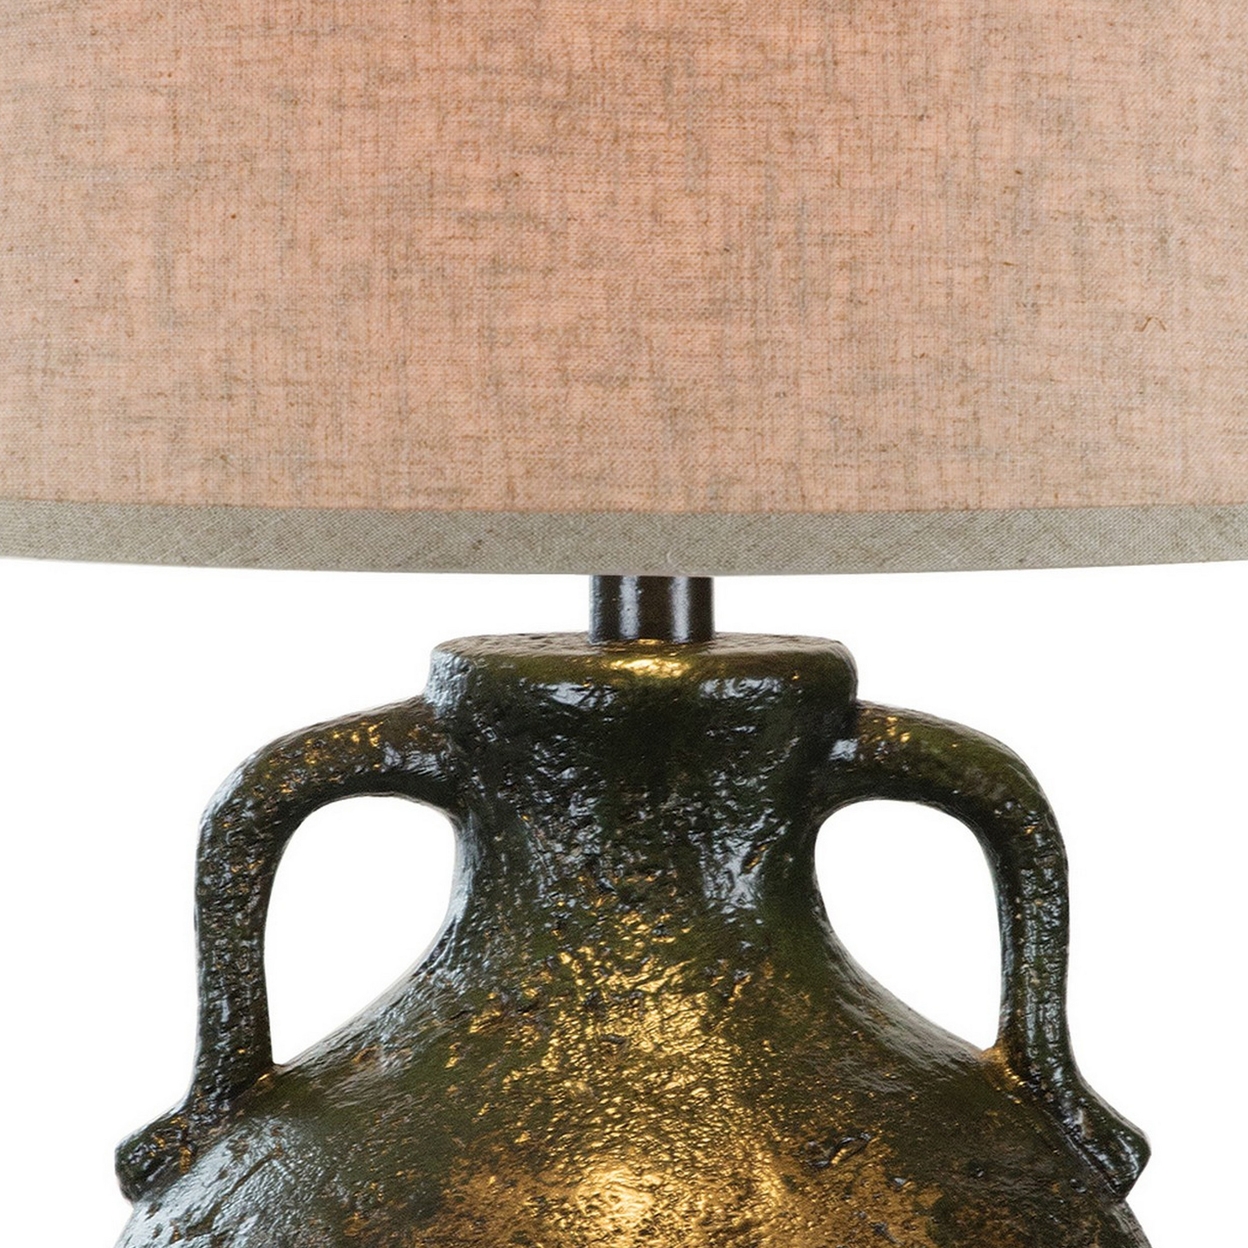 Sila 31 Inch Table Lamp, Pitcher Base, Textured Black, Handles, Drum Shade- Saltoro Sherpi